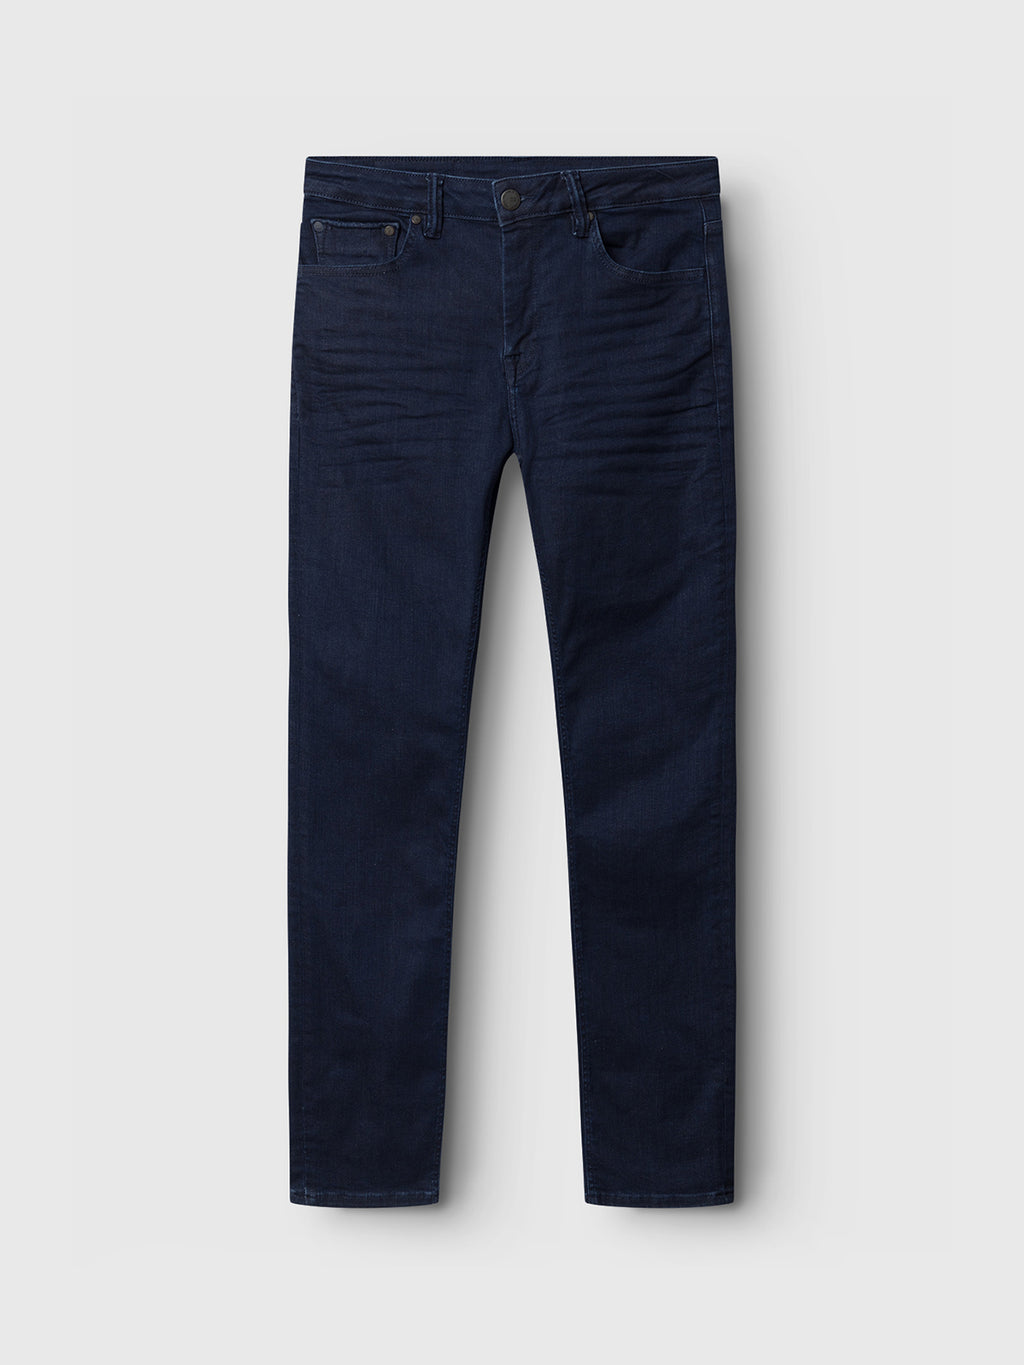 Jones K3869 Jeans - Denim wash